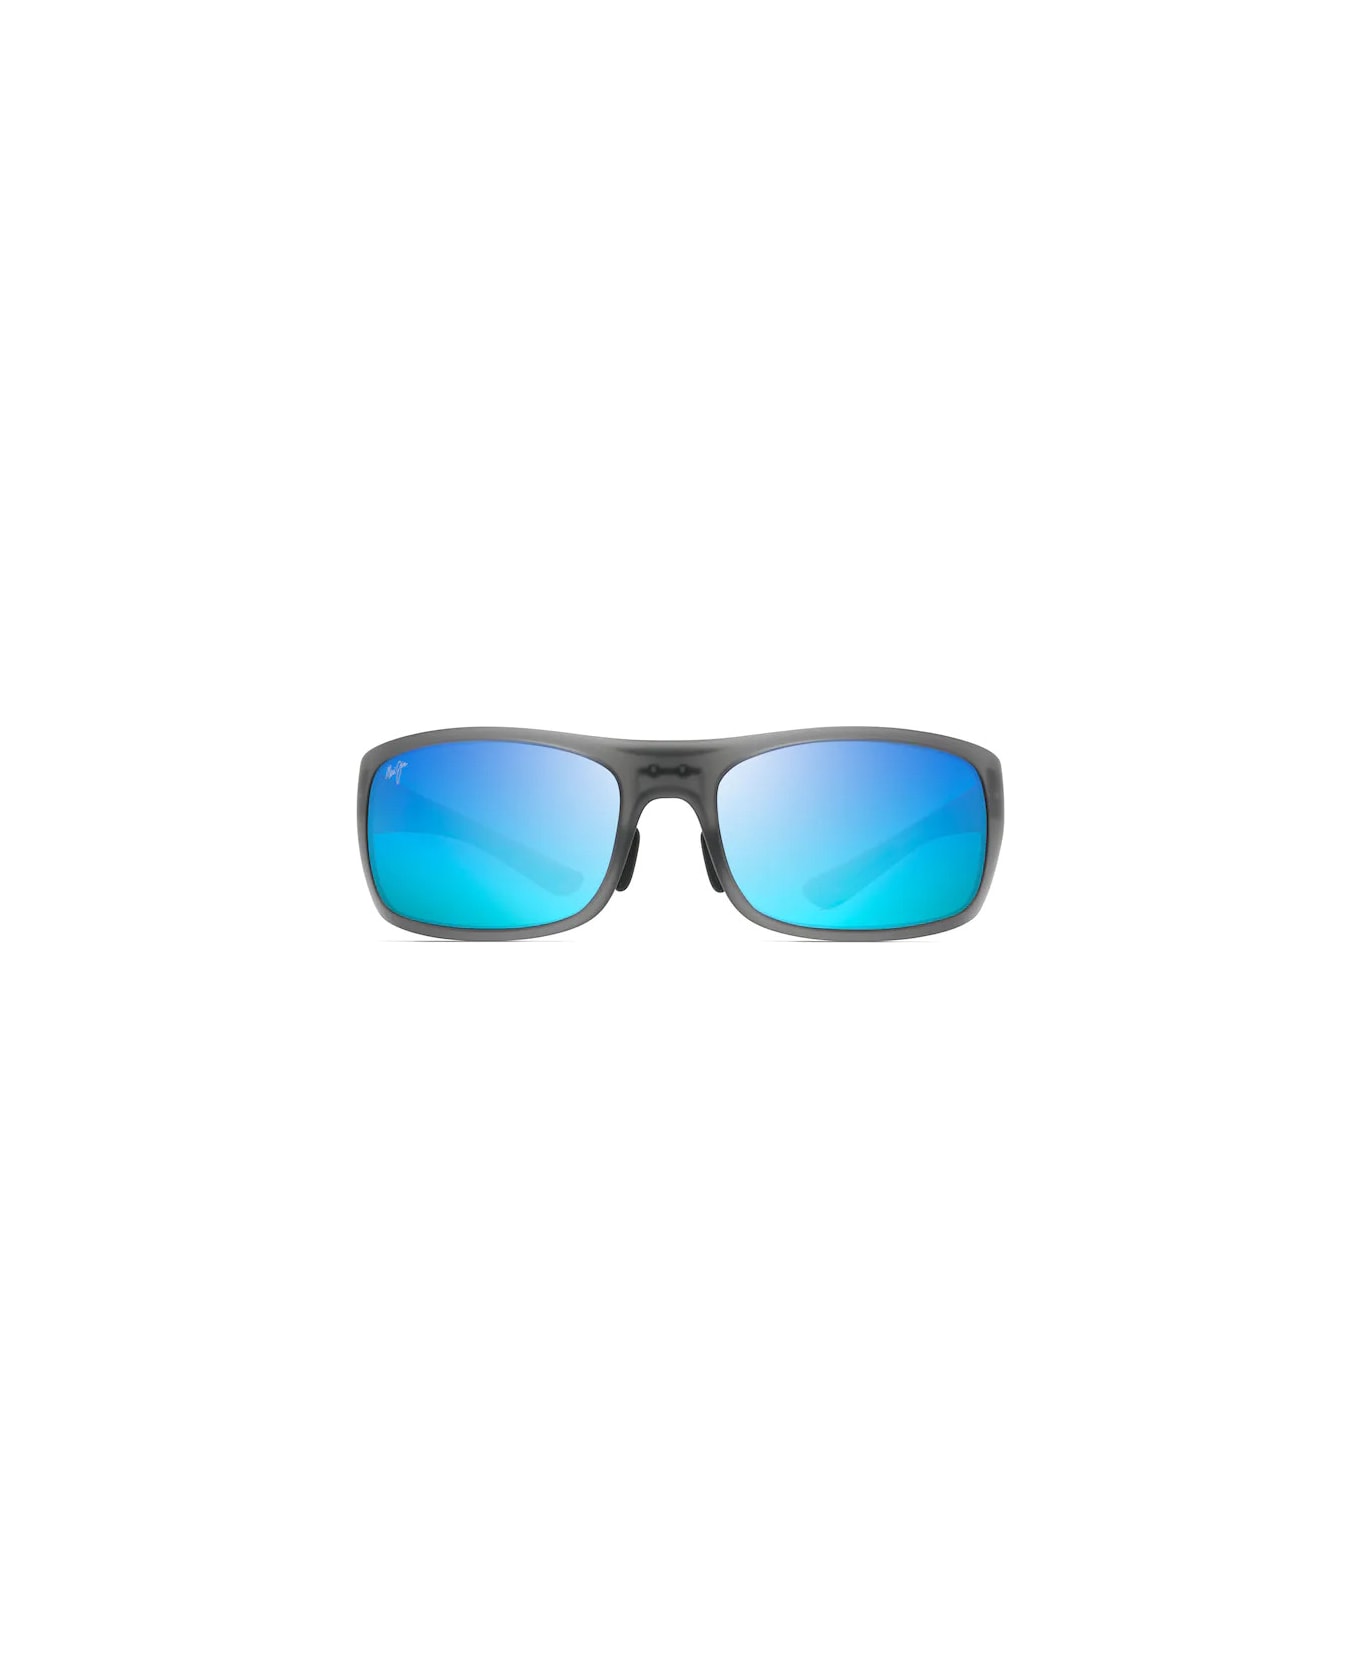 Maui Jim mJ440-11M Sunglasses - Grigio lente blu